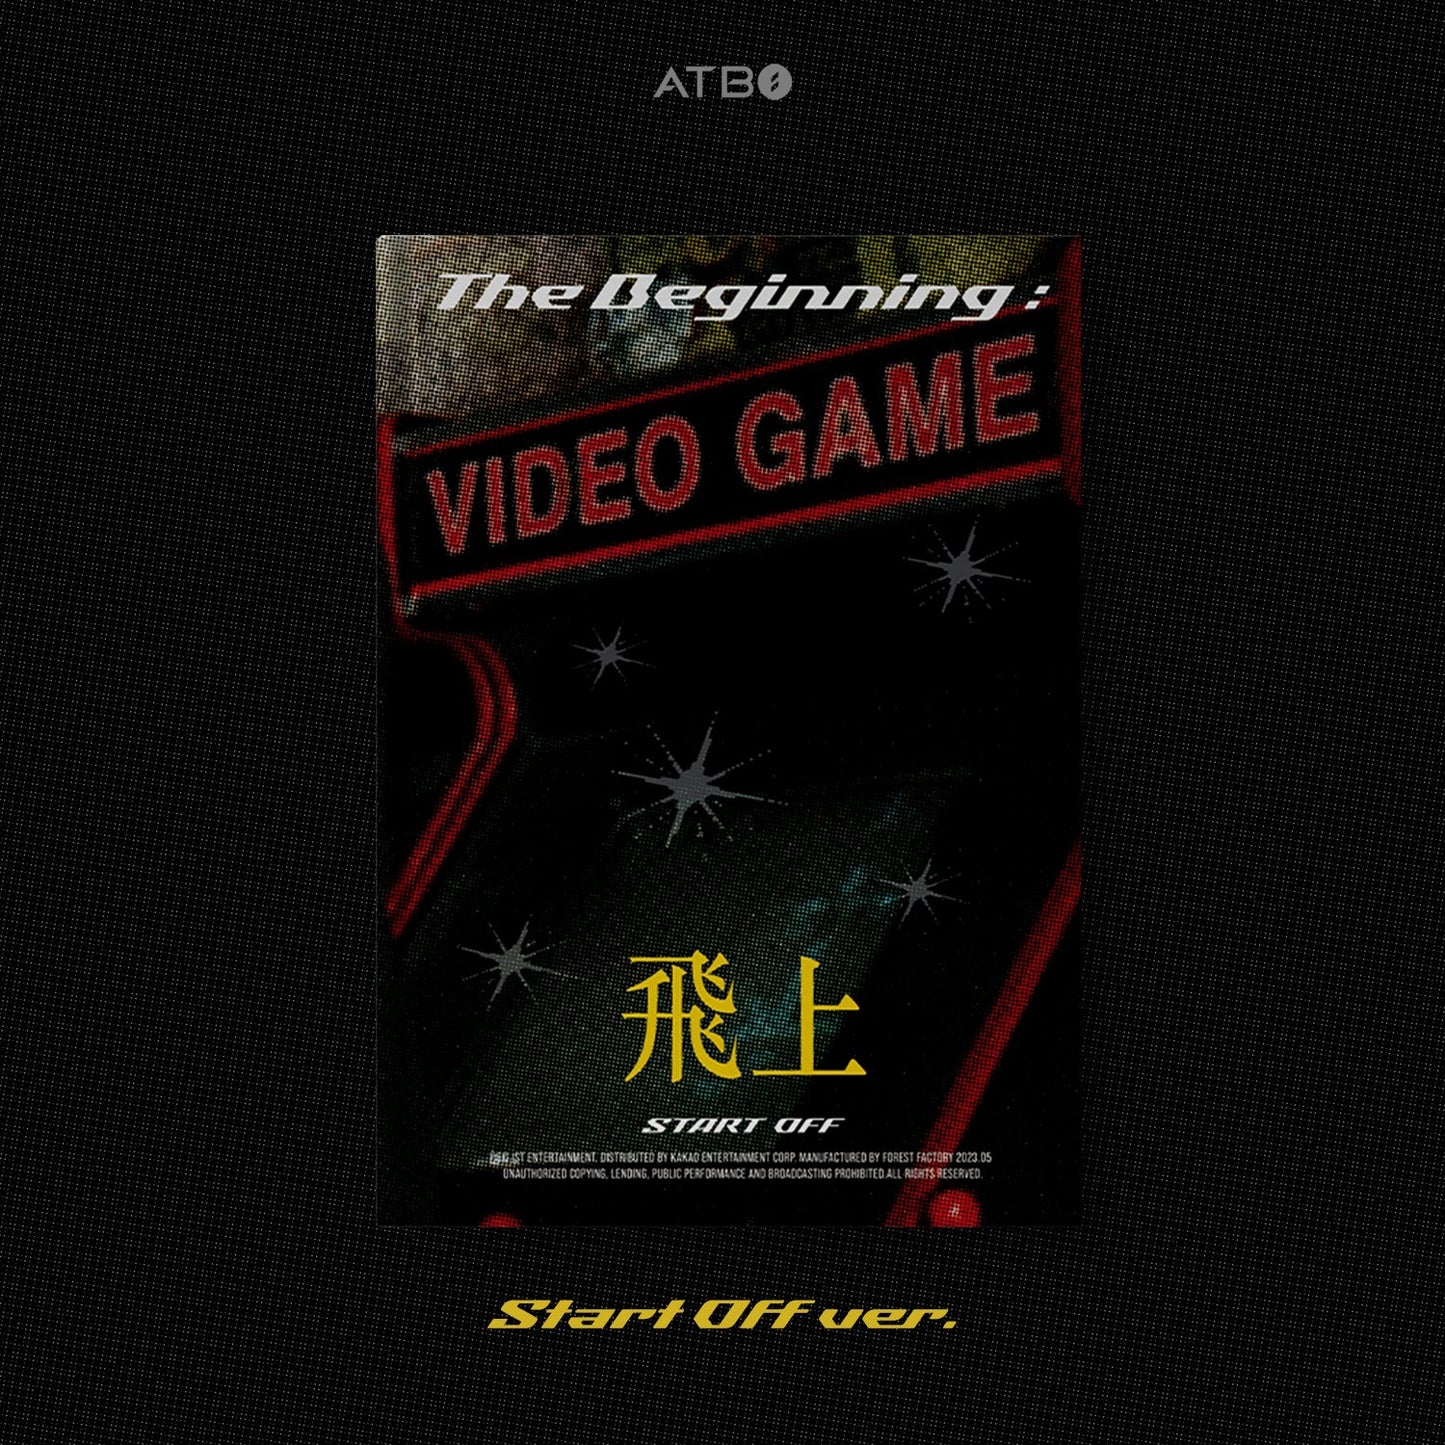 ATBO 3RD MINI ALBUM 'THE BEGINNING : 飛上' START OFF VERSON COVER